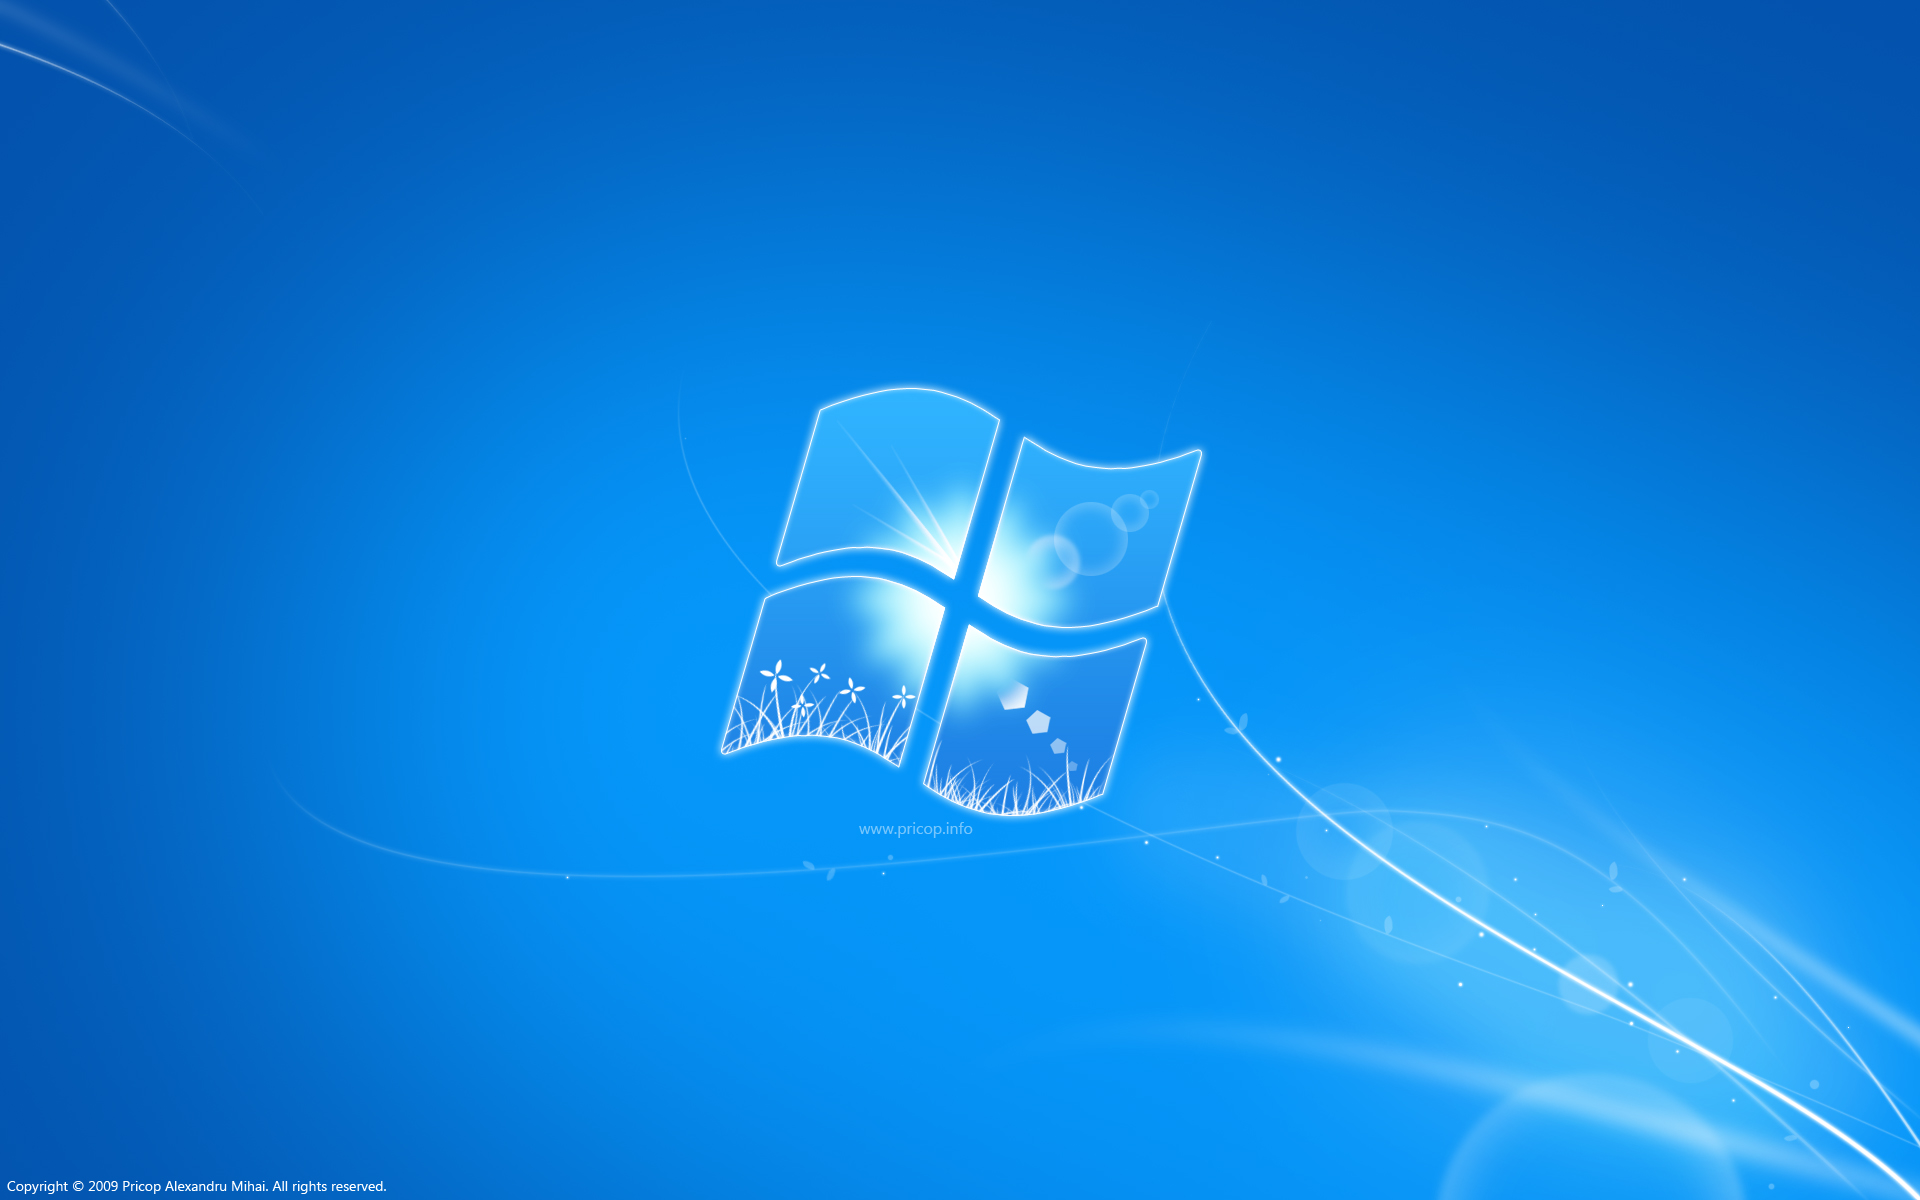 Windows, wallpaper, monitor, blue, pricop (#95761)